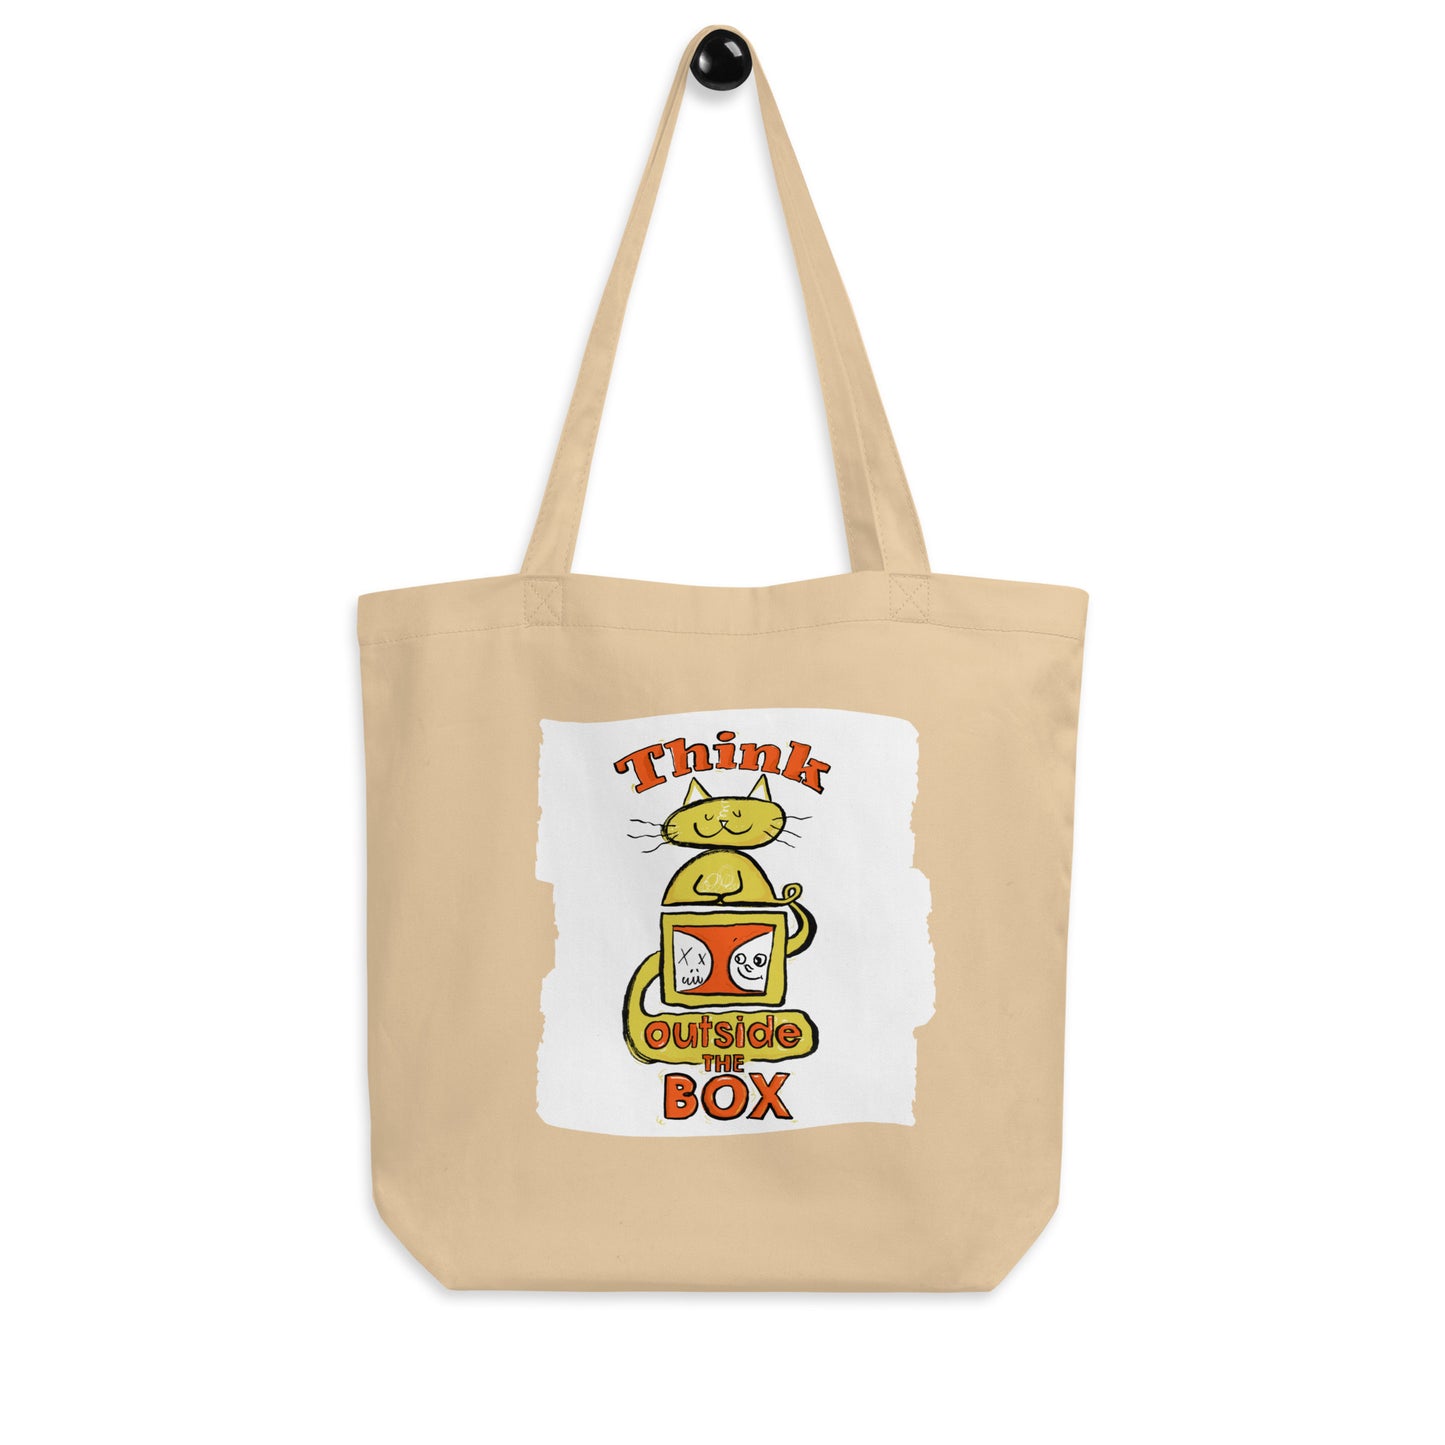 "Think outside the box" eco tote bag